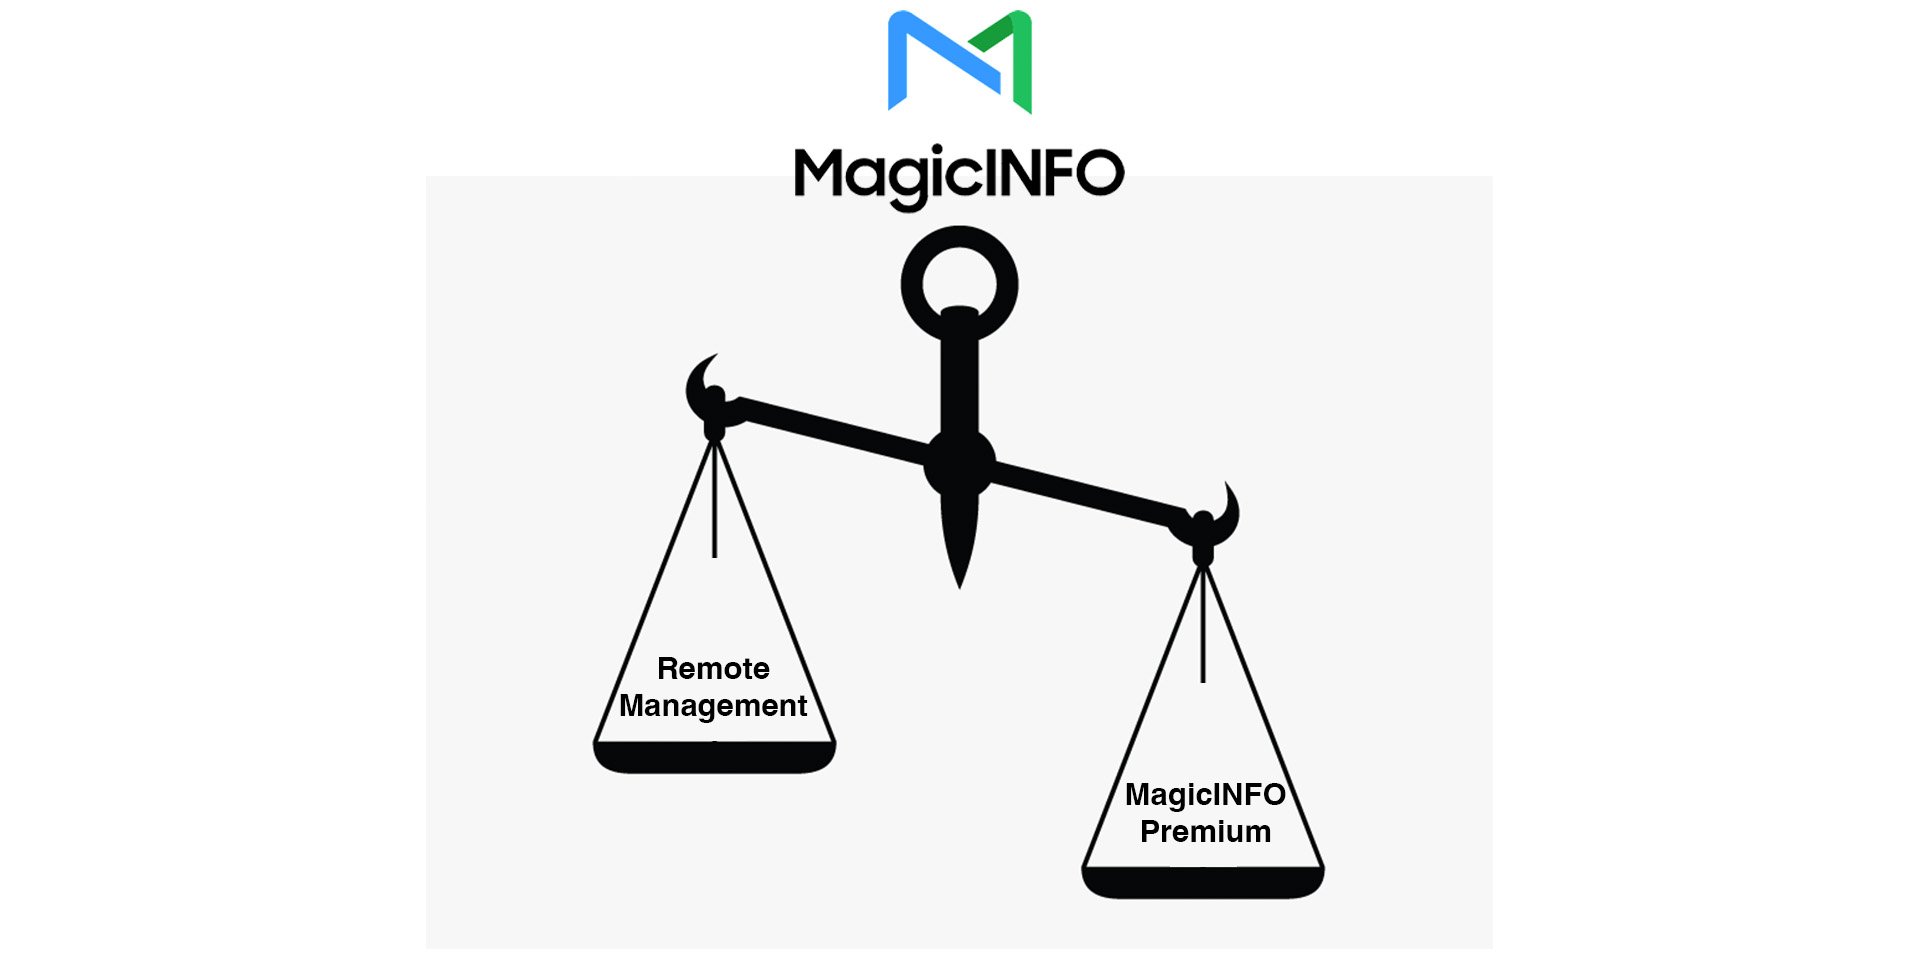 MagicINFO Premium vs Remote Management